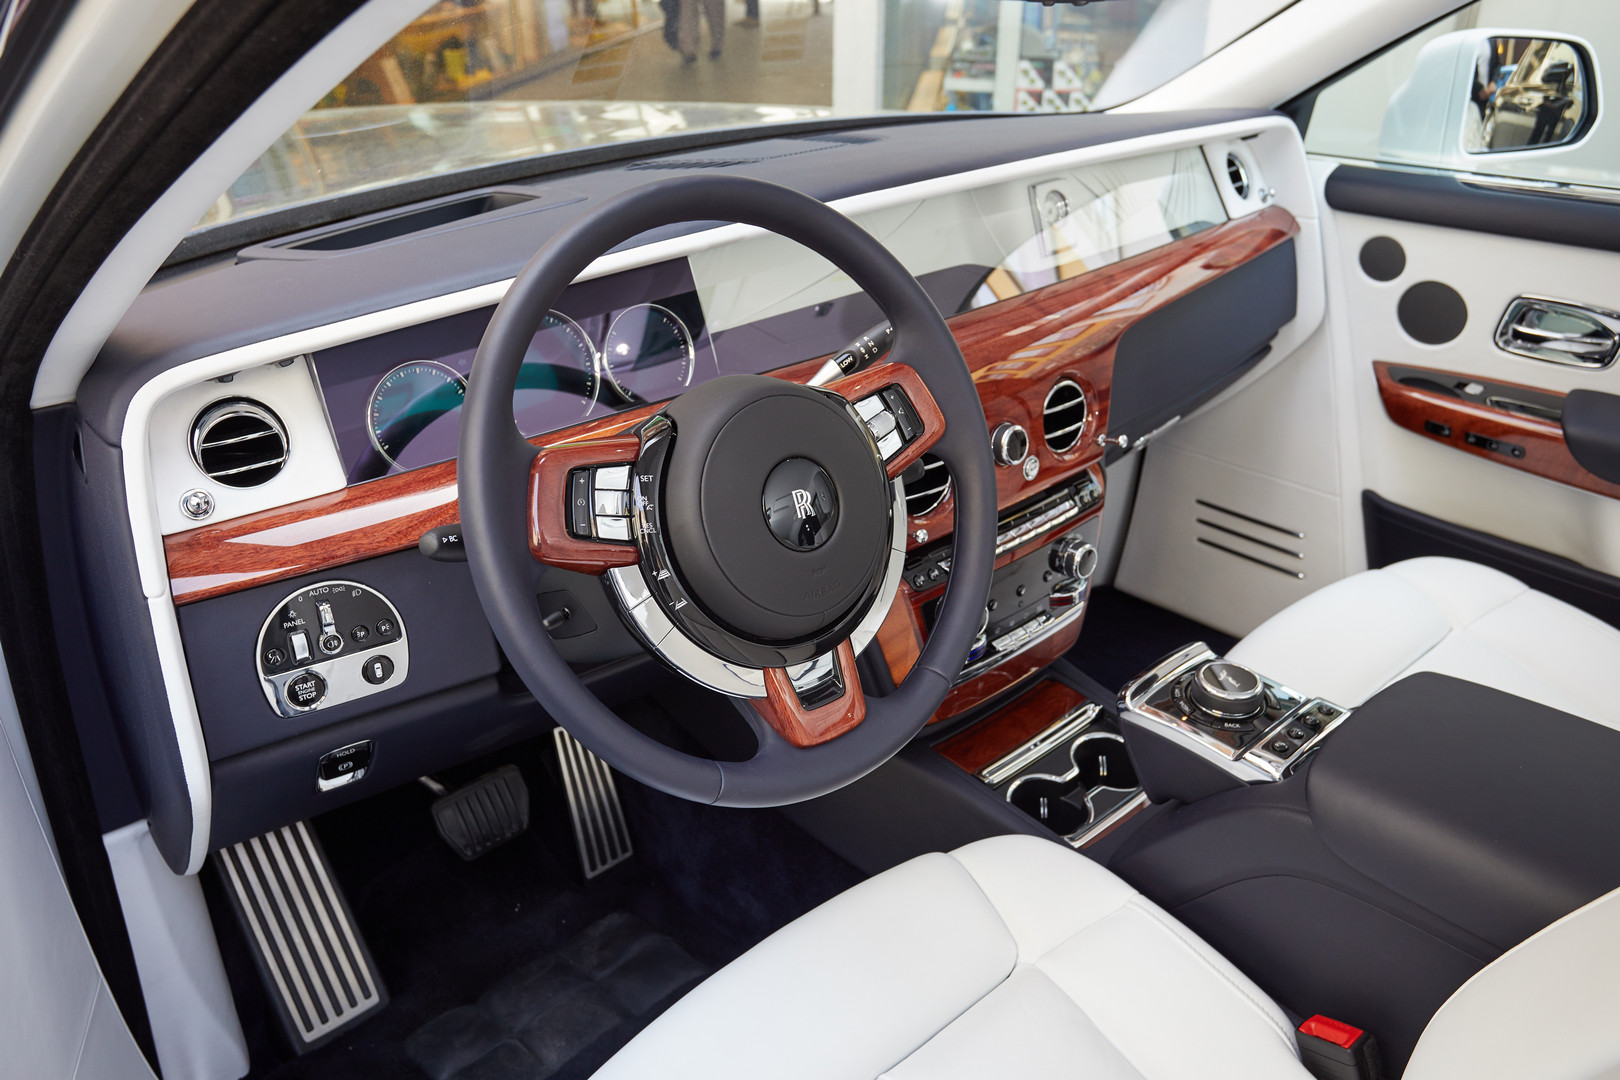 Rolls Royce Phantom Viii Review Gtspirit